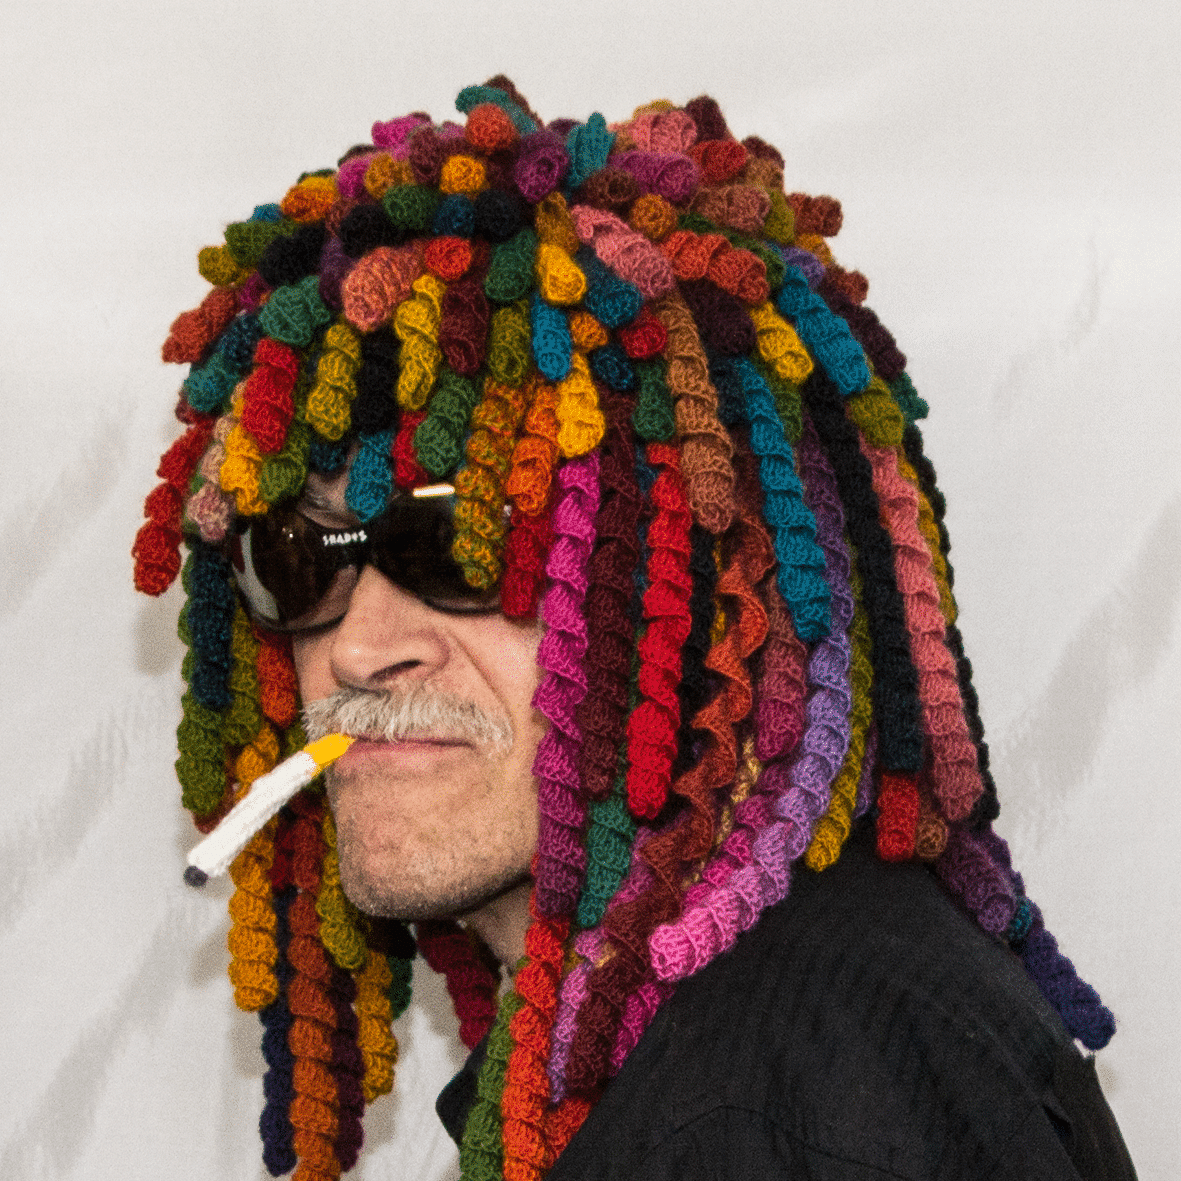 Crochet Curly Wig Q Rasta Man2 Crochet Curly Wig,Crochet Wig,Carnival Crochet,Costume Ideas DIY